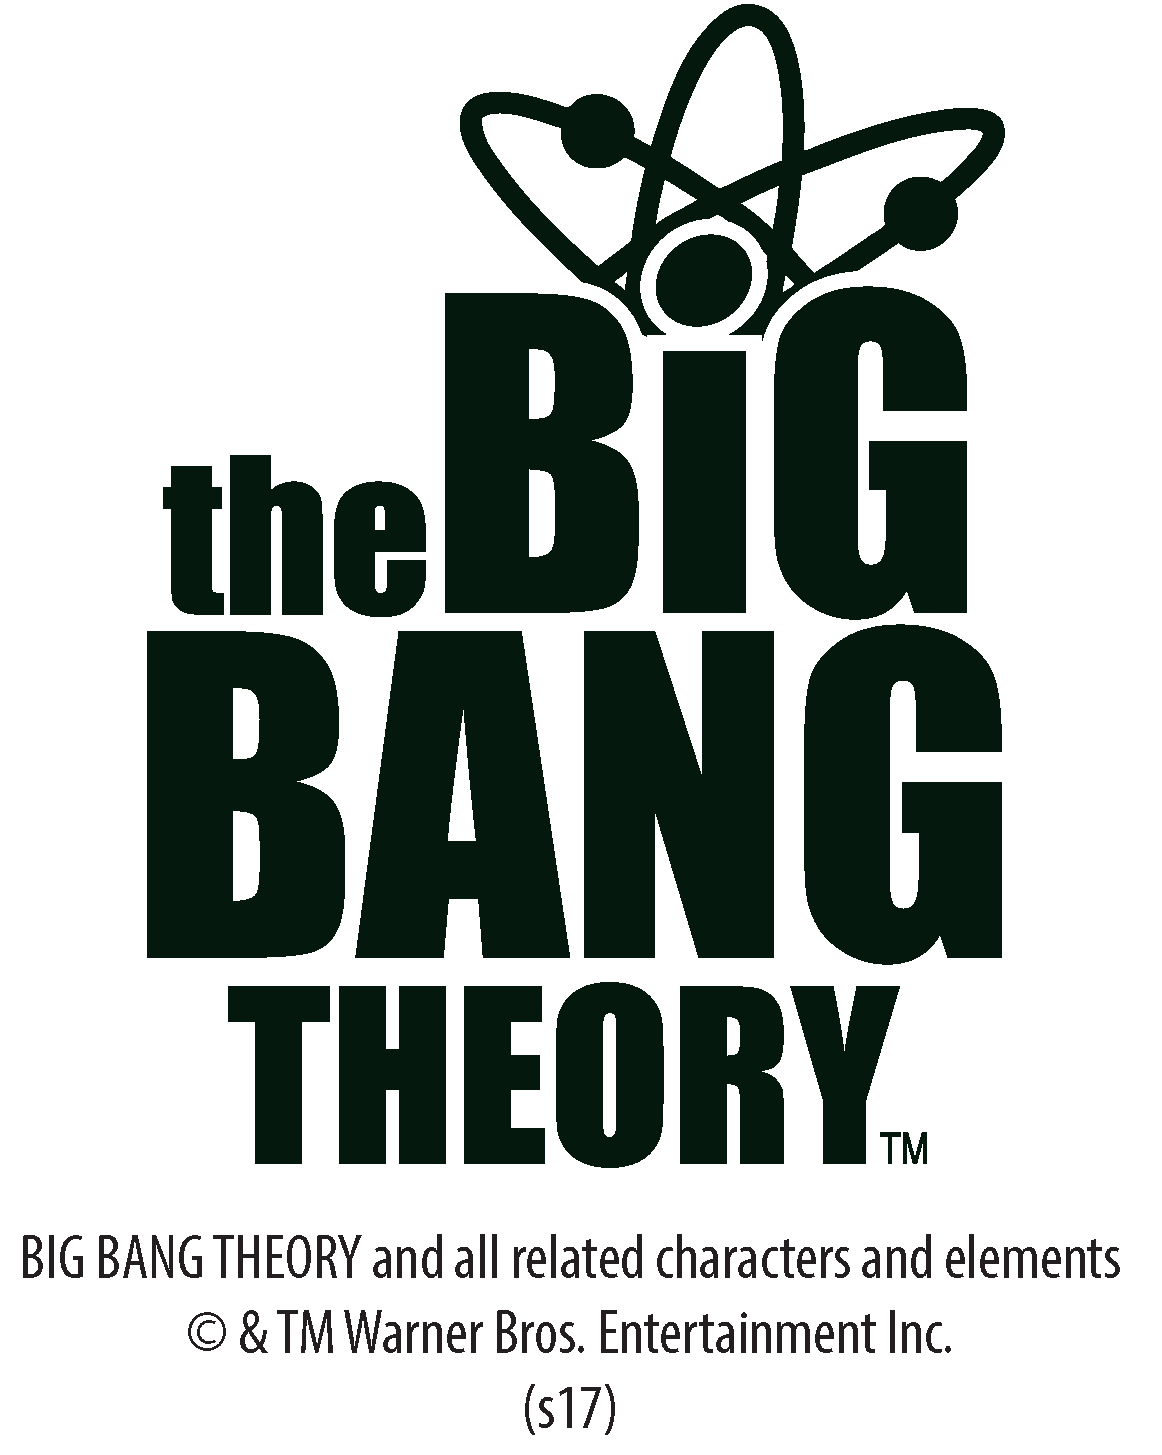 Big Bang Theory +Logo Rock Lizard Spock Official Men's T-shirt